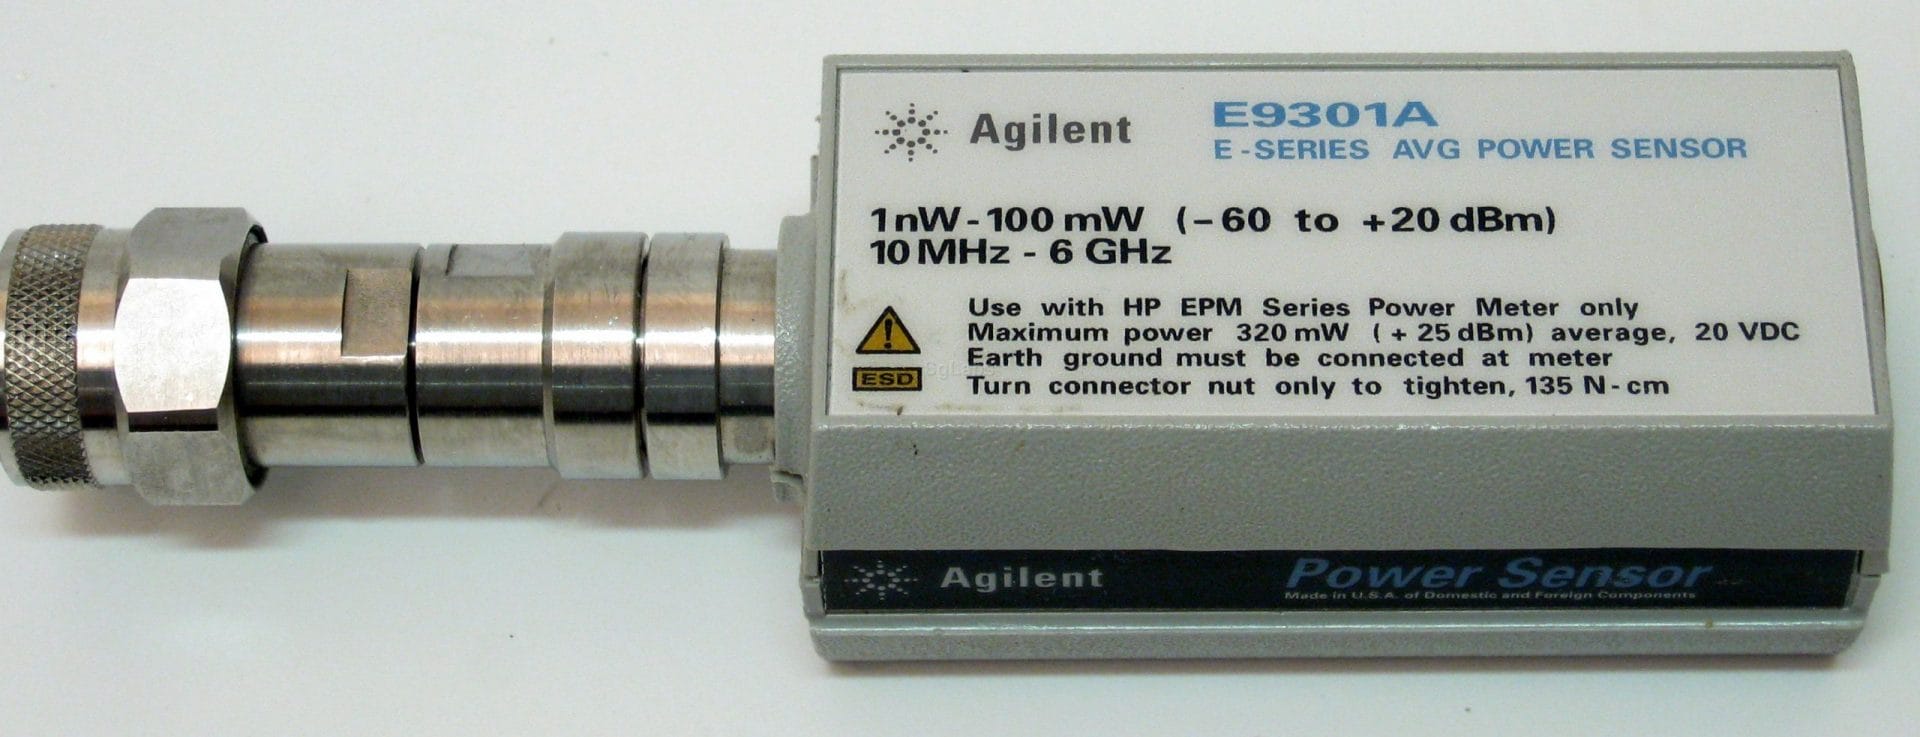 Keysight E9301A E-Series Average Power Sensor 10Mhz-6Ghz